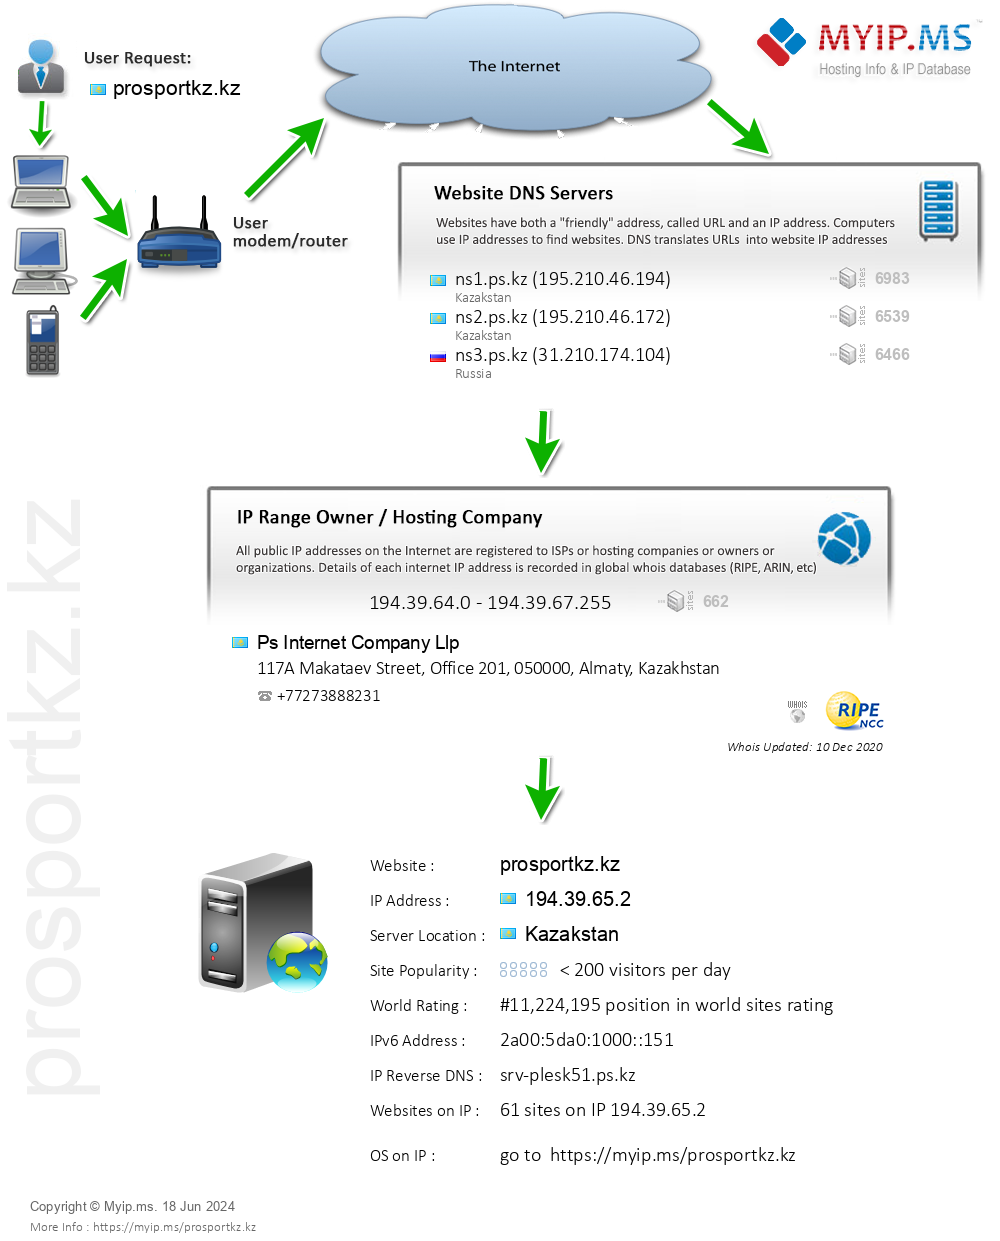 Prosportkz.kz - Website Hosting Visual IP Diagram